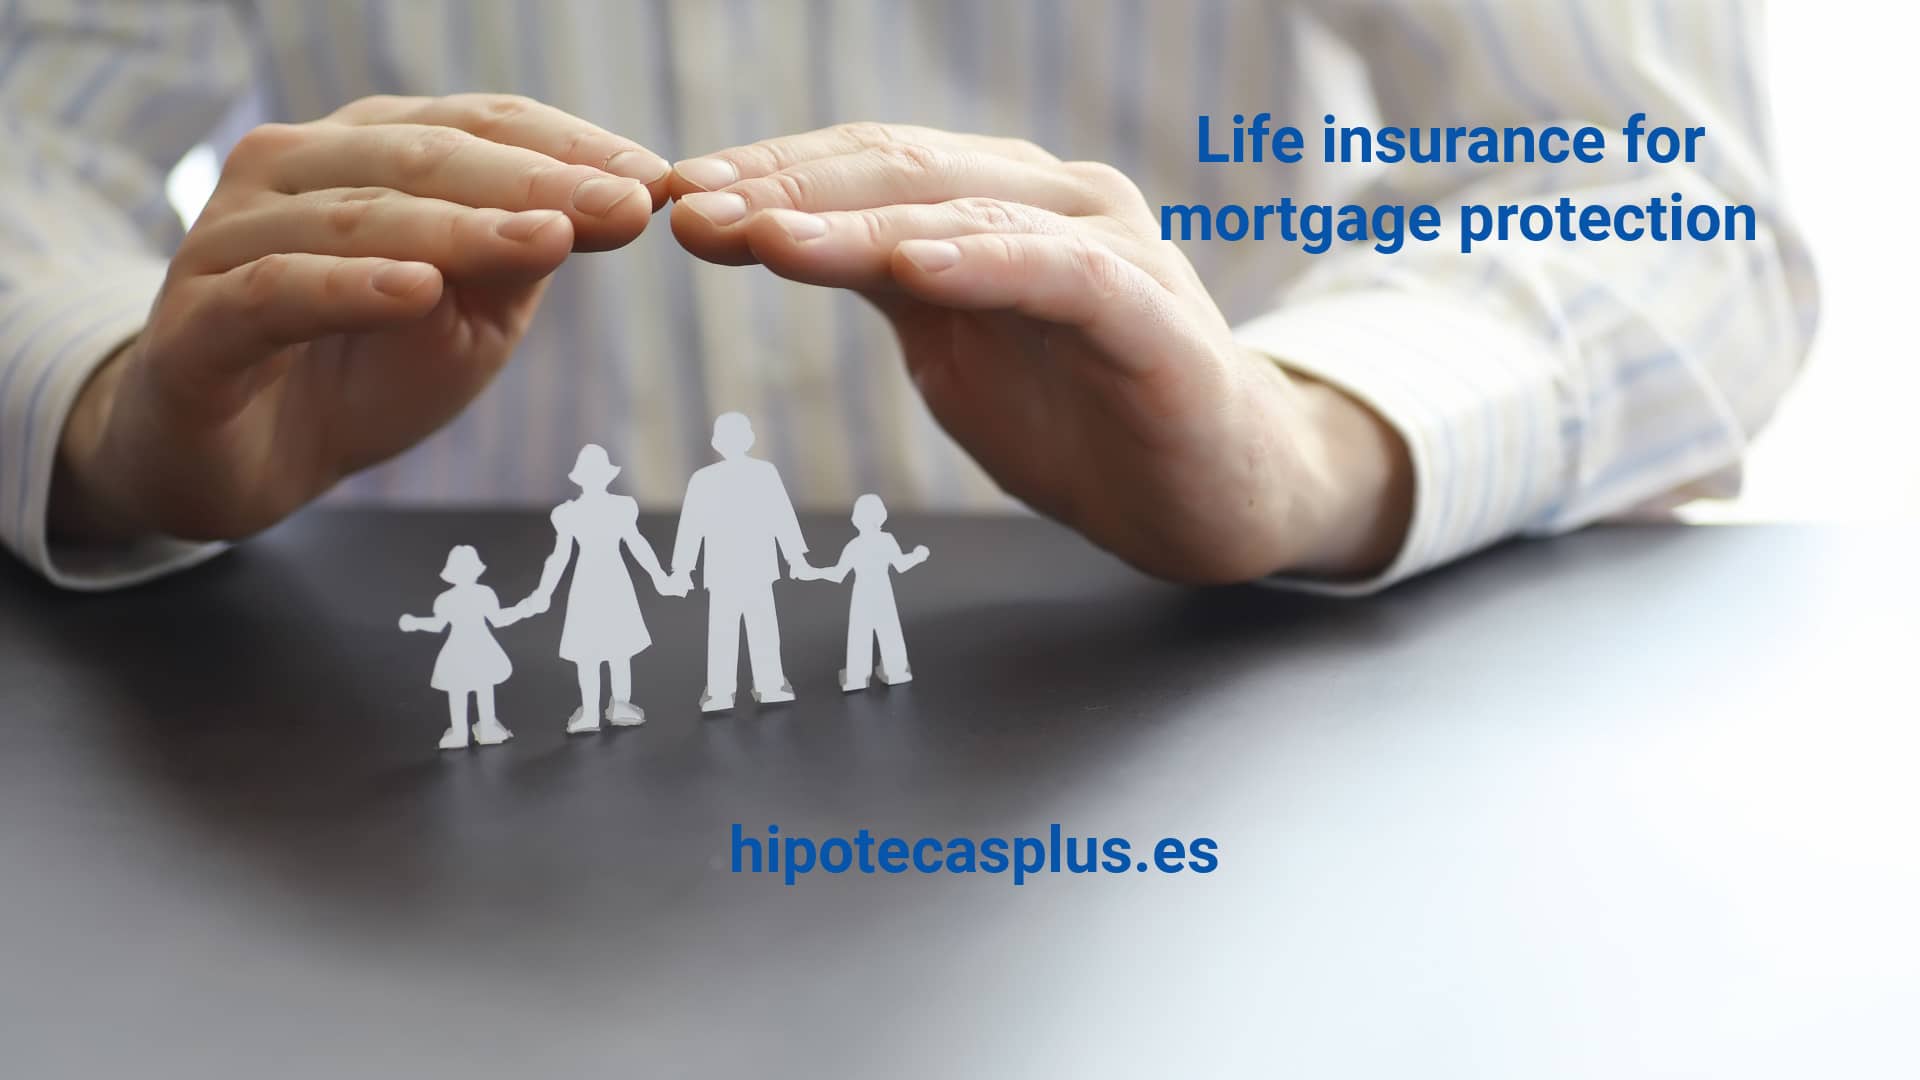 https://www.hipotecasplus.es/wp-content/uploads/HipotecasPlus-Life-insurance-for-mortgage-protection.jpg